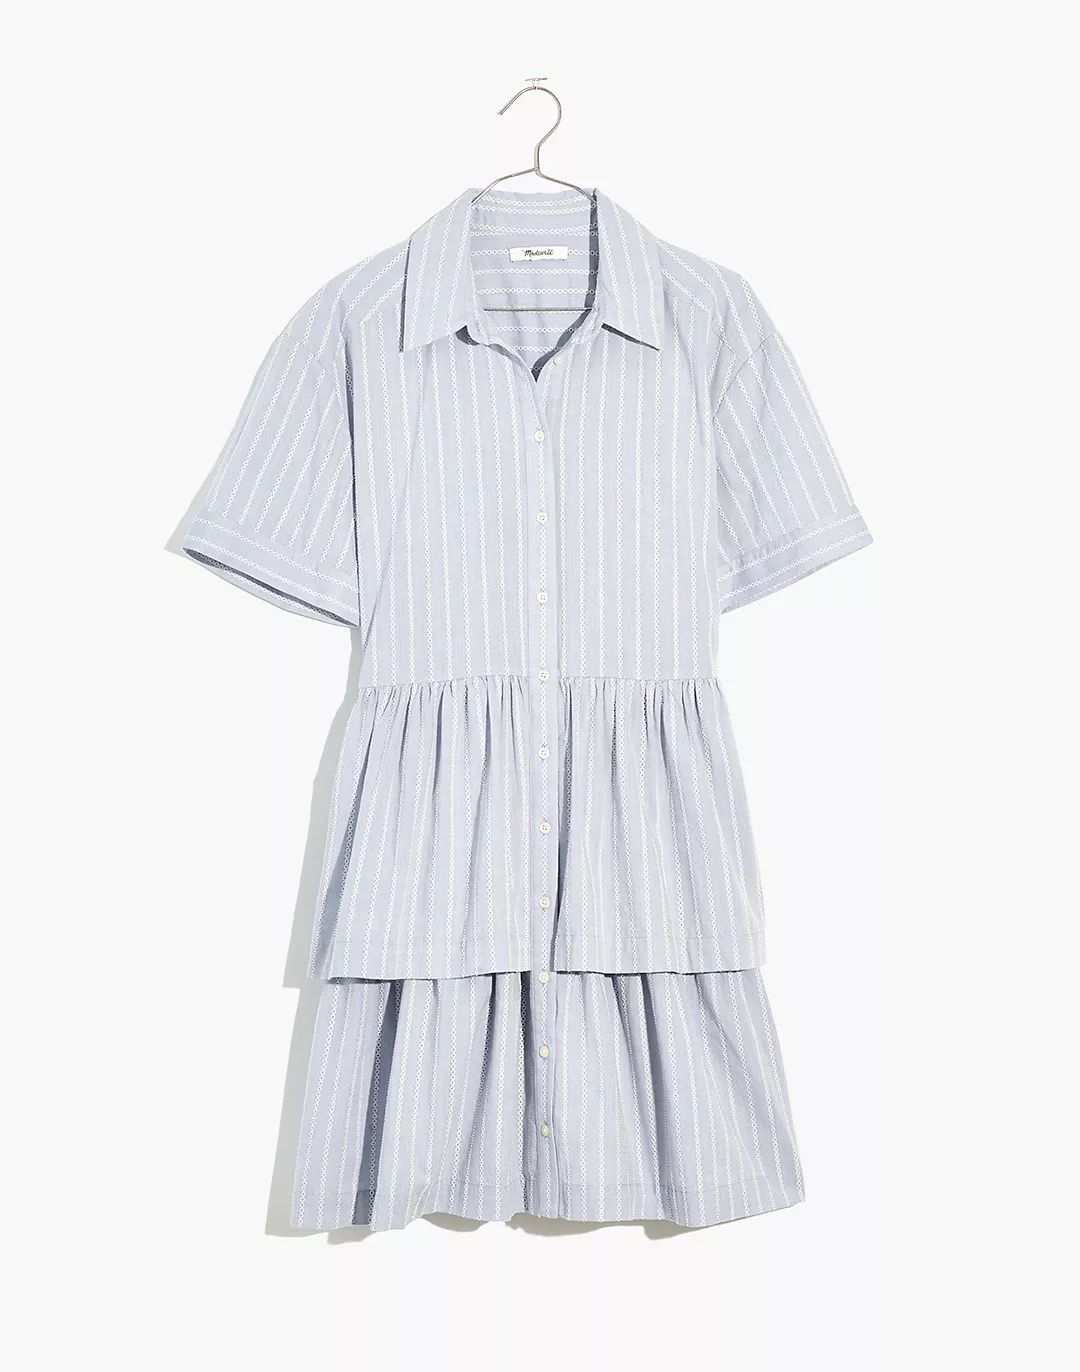 Tiered Resort Shirtdress in Stripe | Madewell